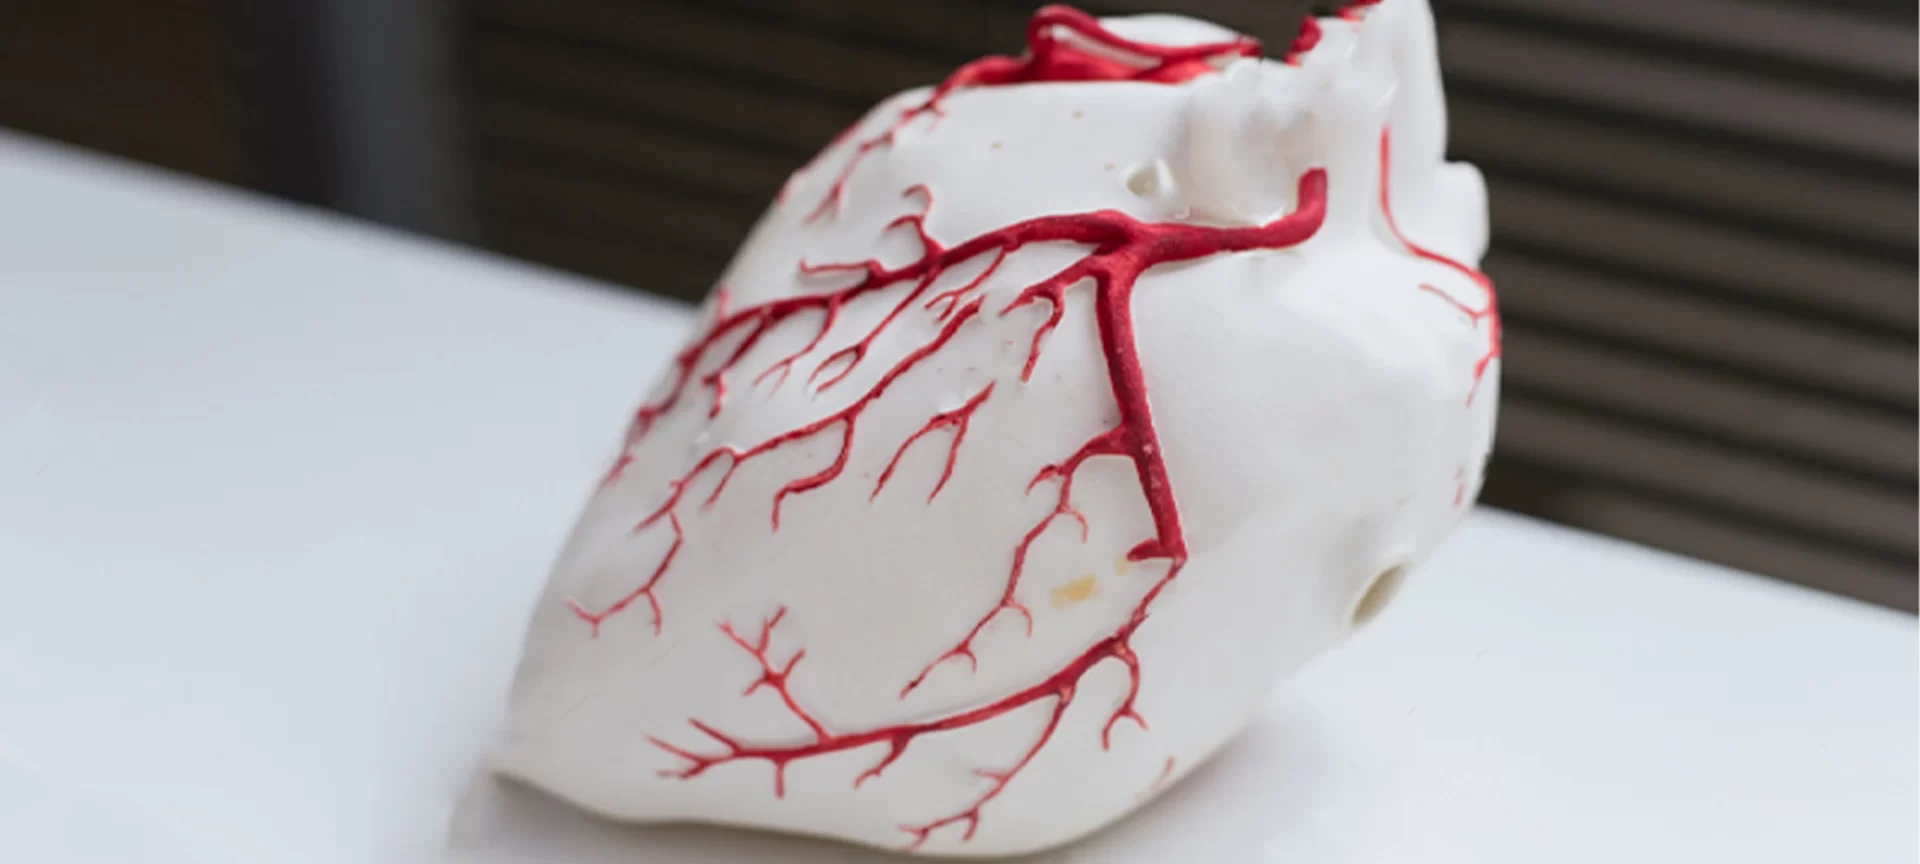 3D printed bio heart